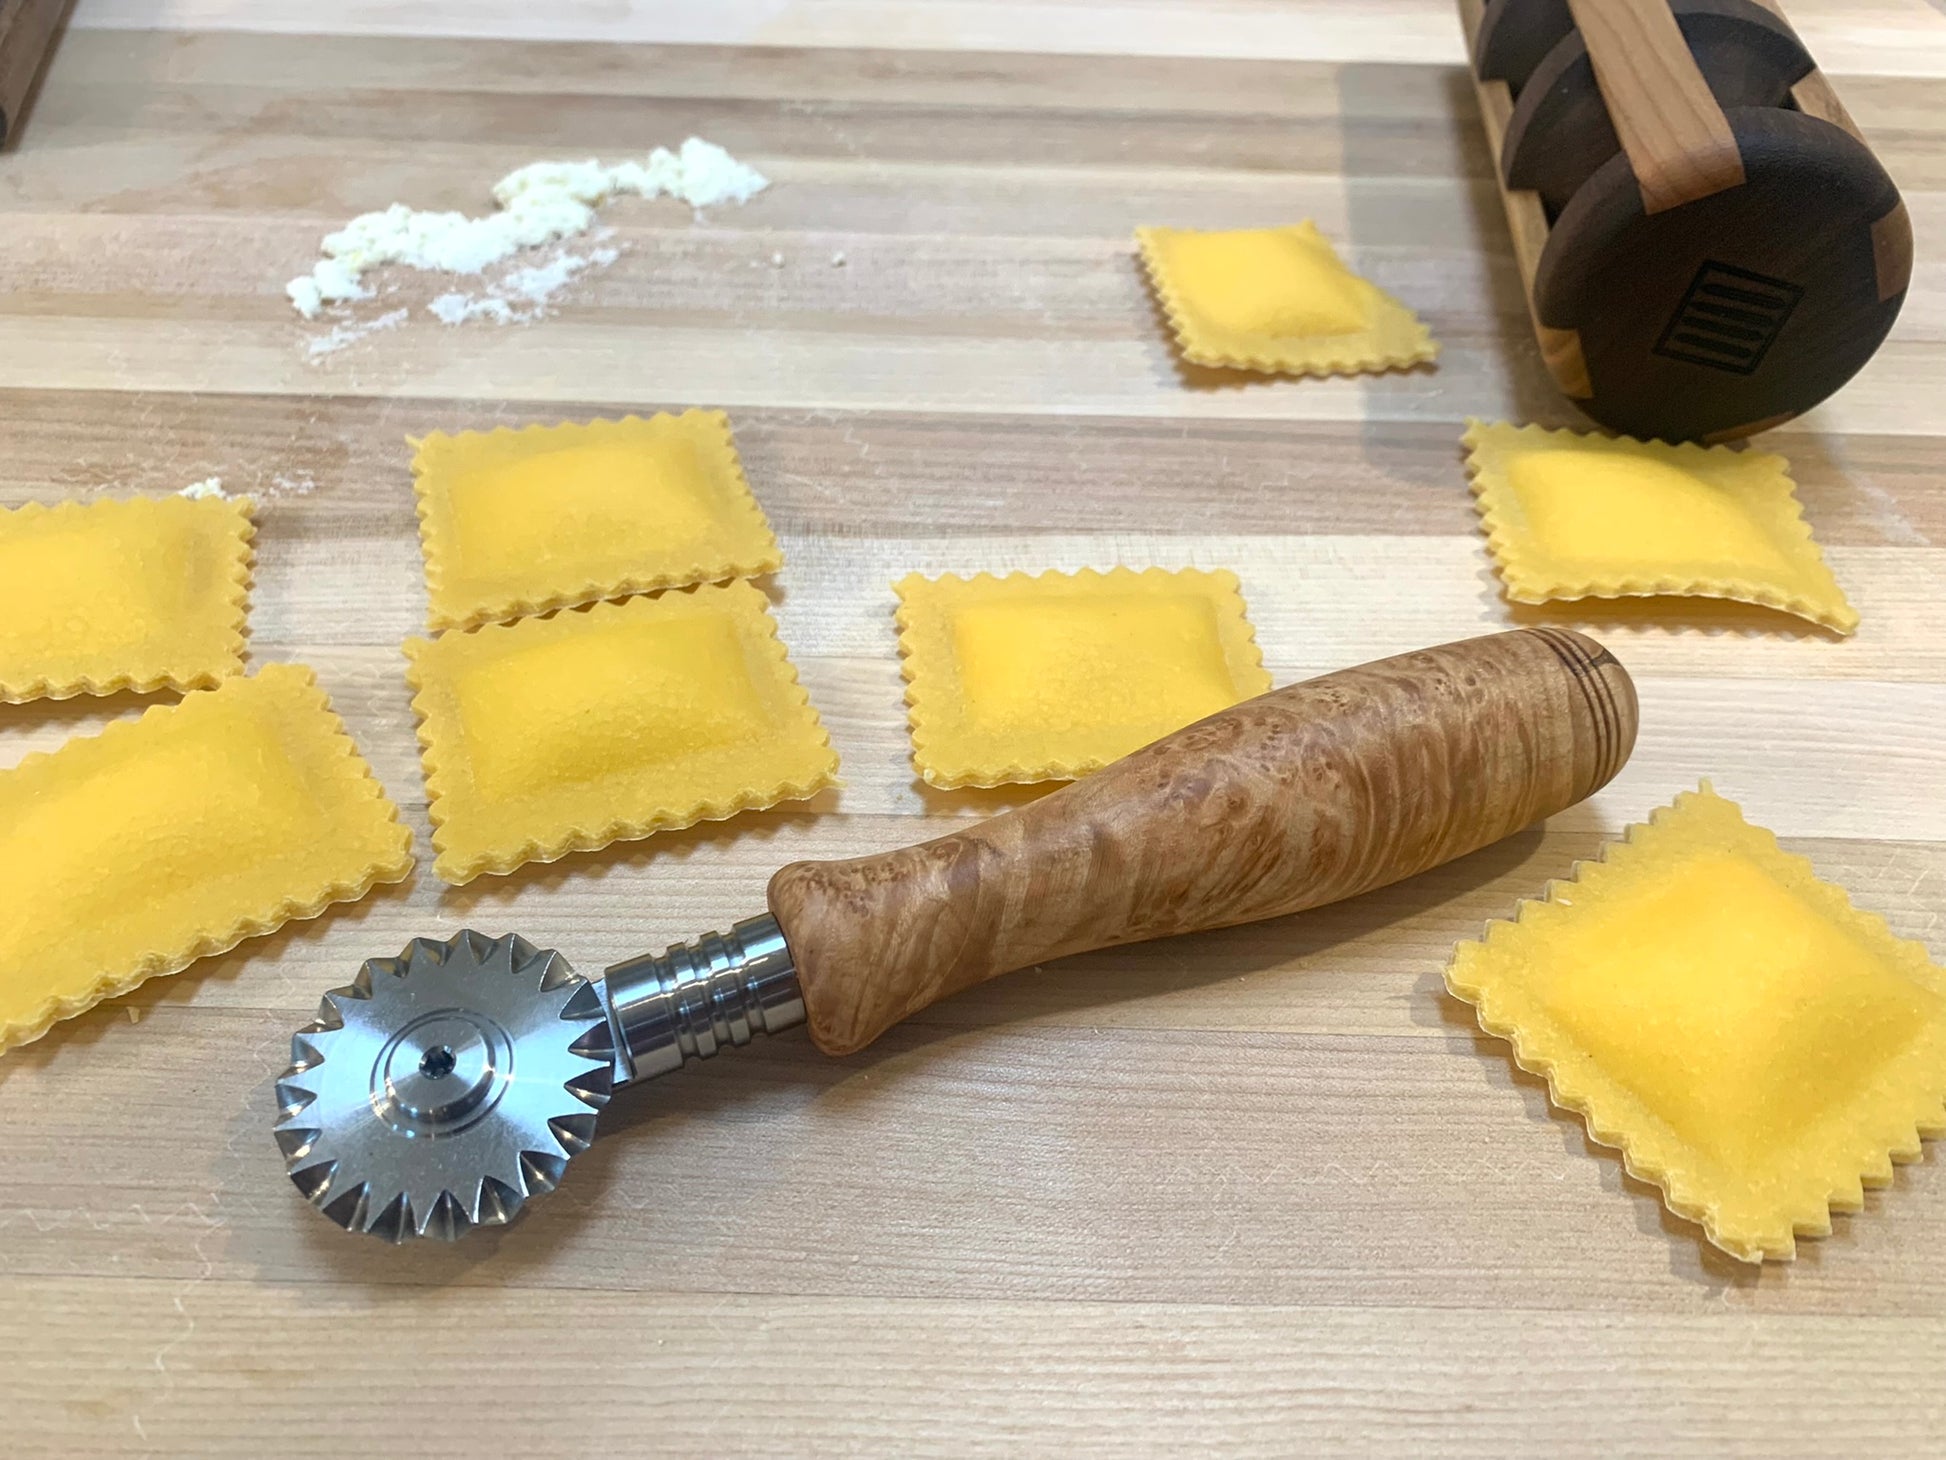 Custom Burl Handled Pasta Cutters 